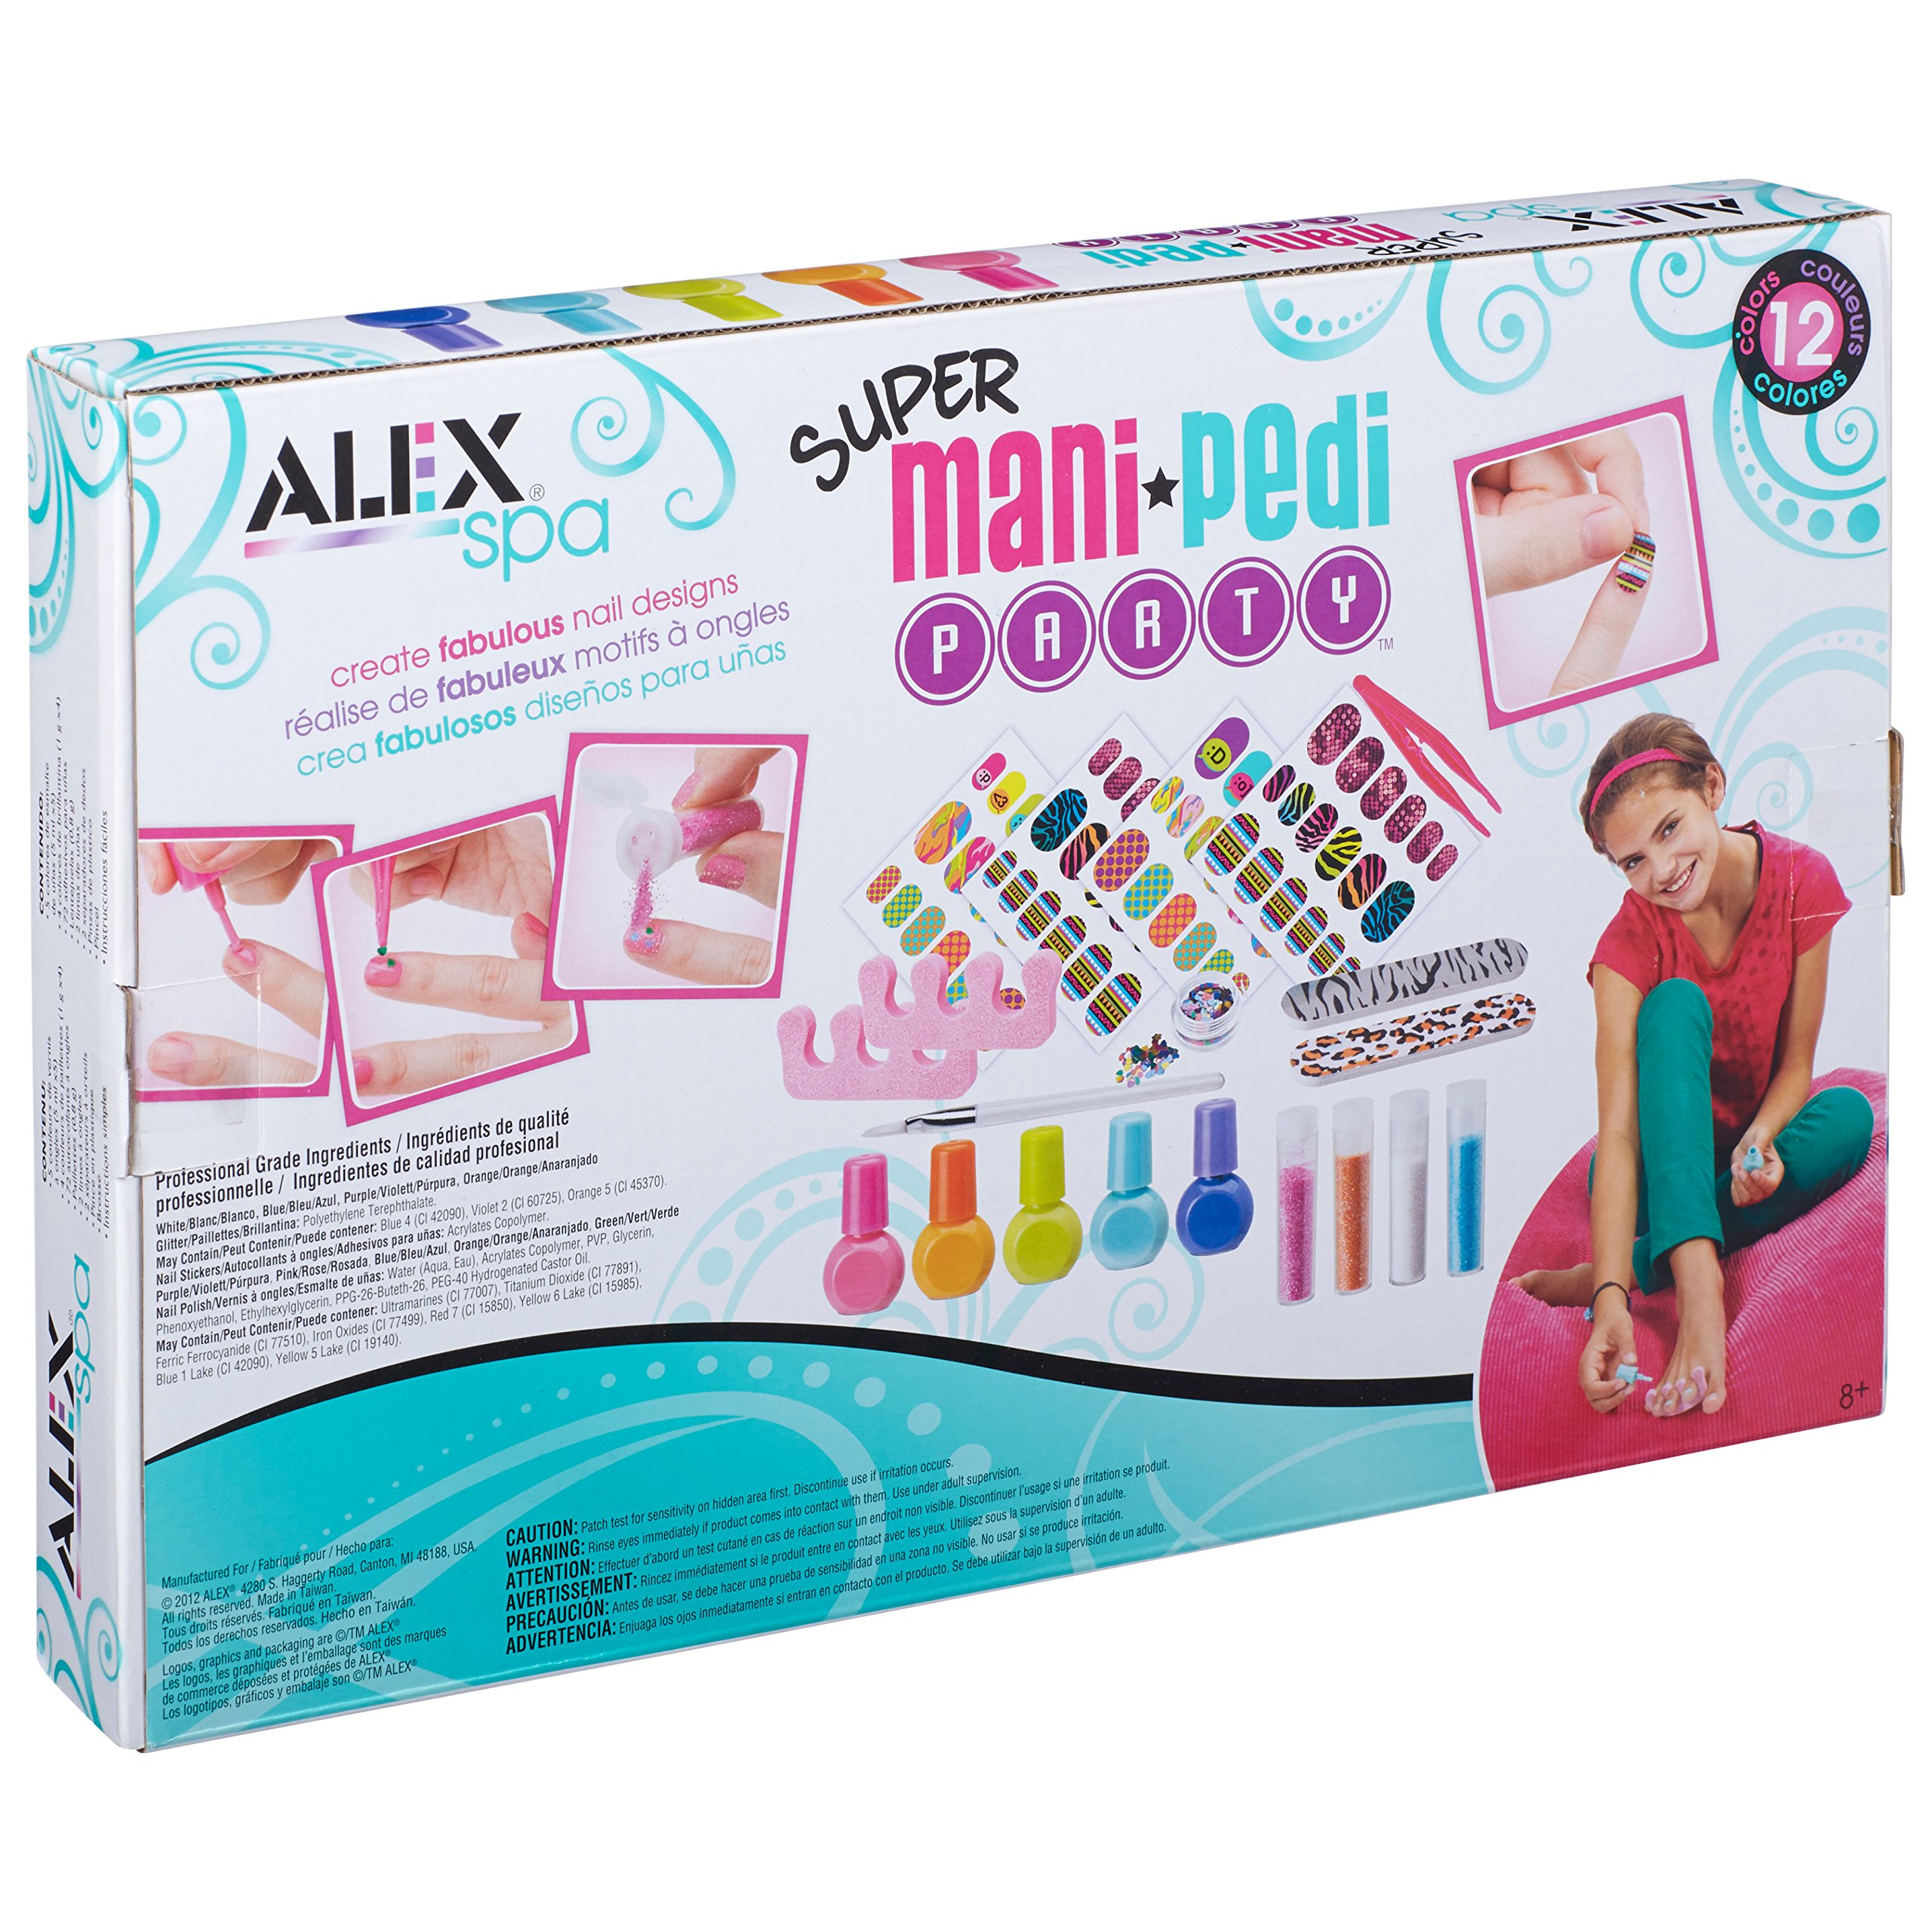 Alex Spa Super Mani Pedi Party Kit Girls Fashion Activity